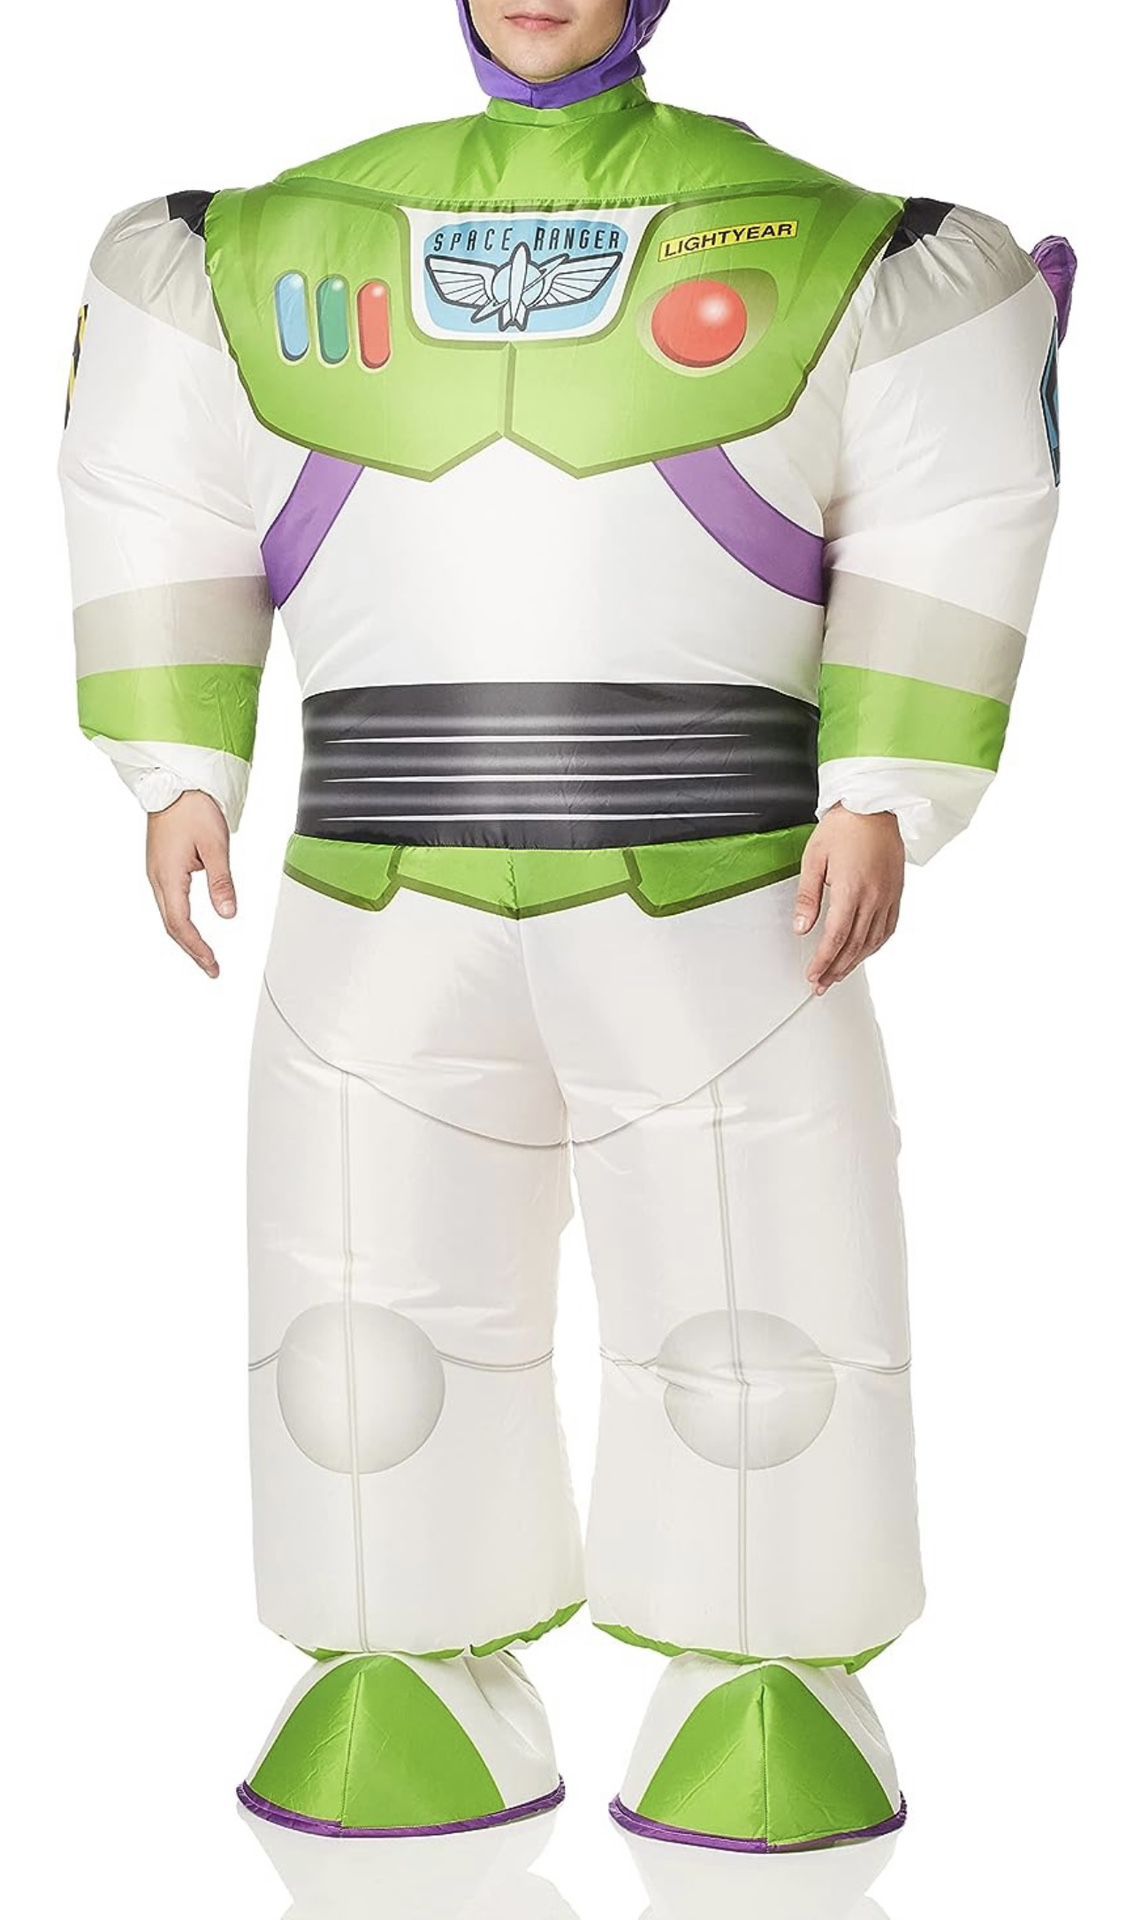 Buzz Lightyear Inflatable Costume & Decor